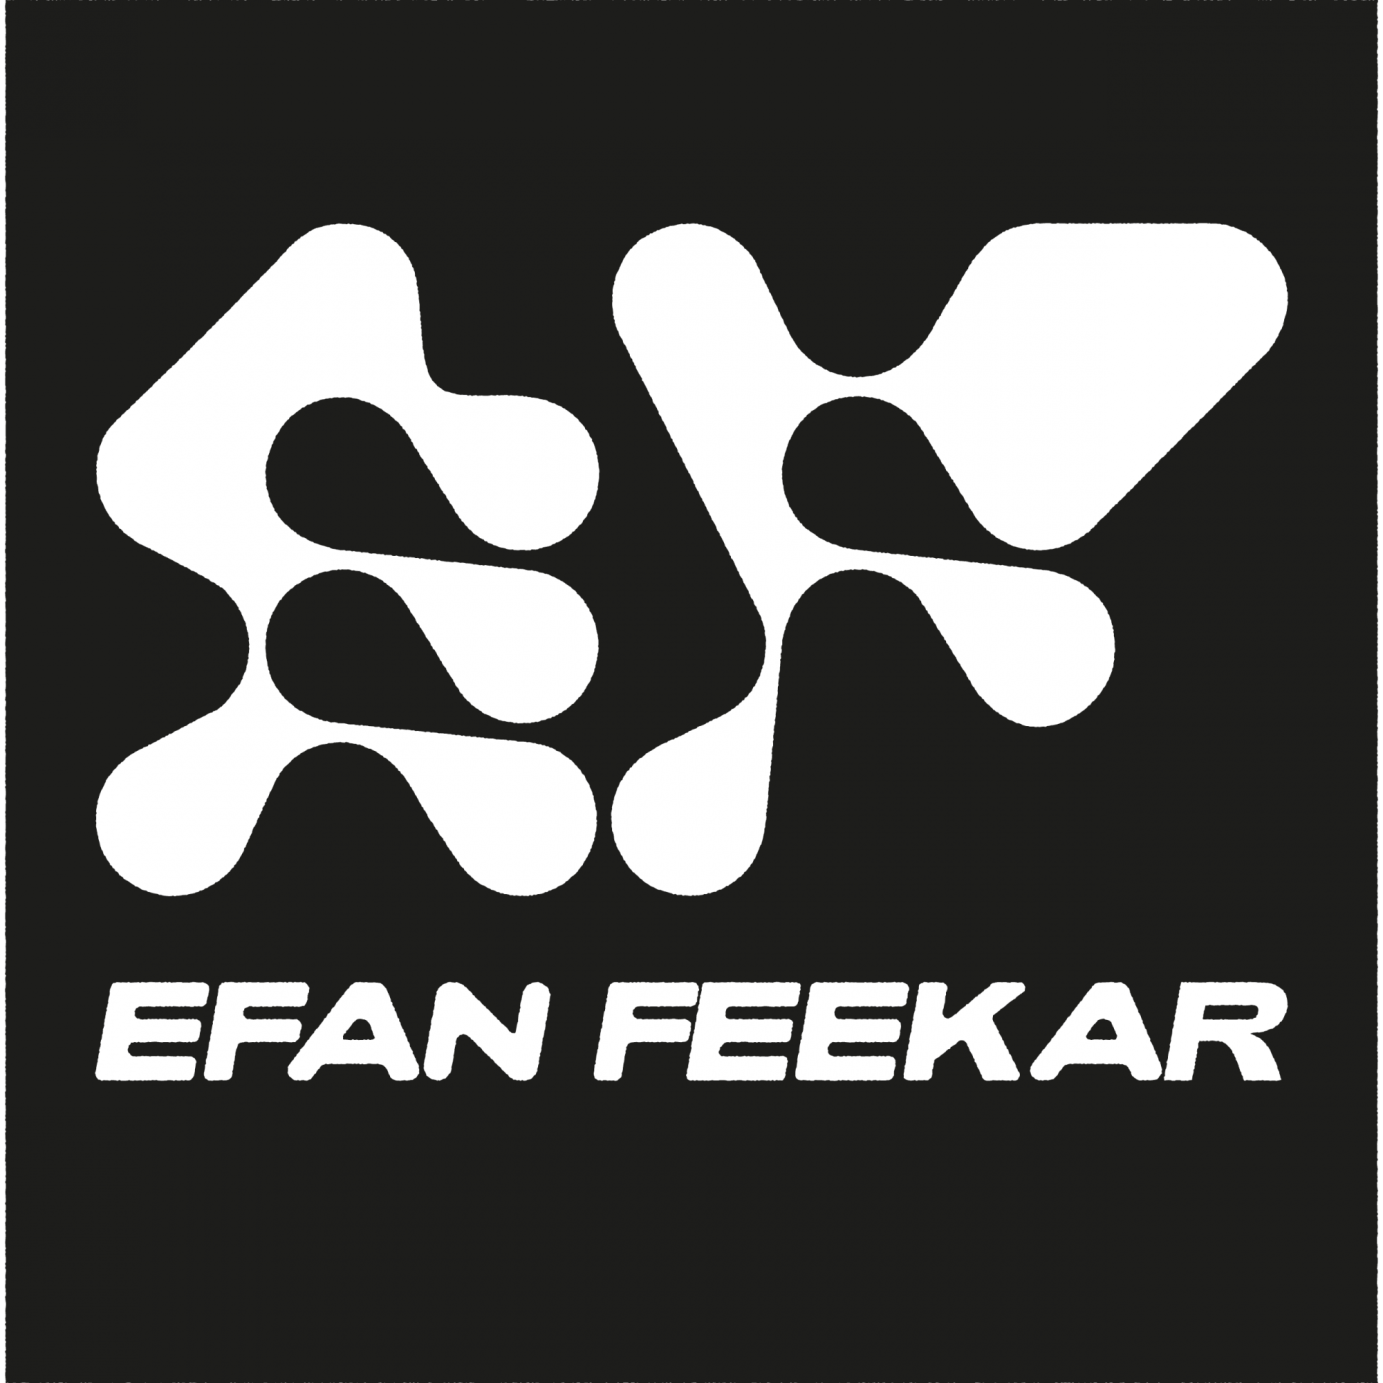 Efan Feekar Logo and Sticker Mockups